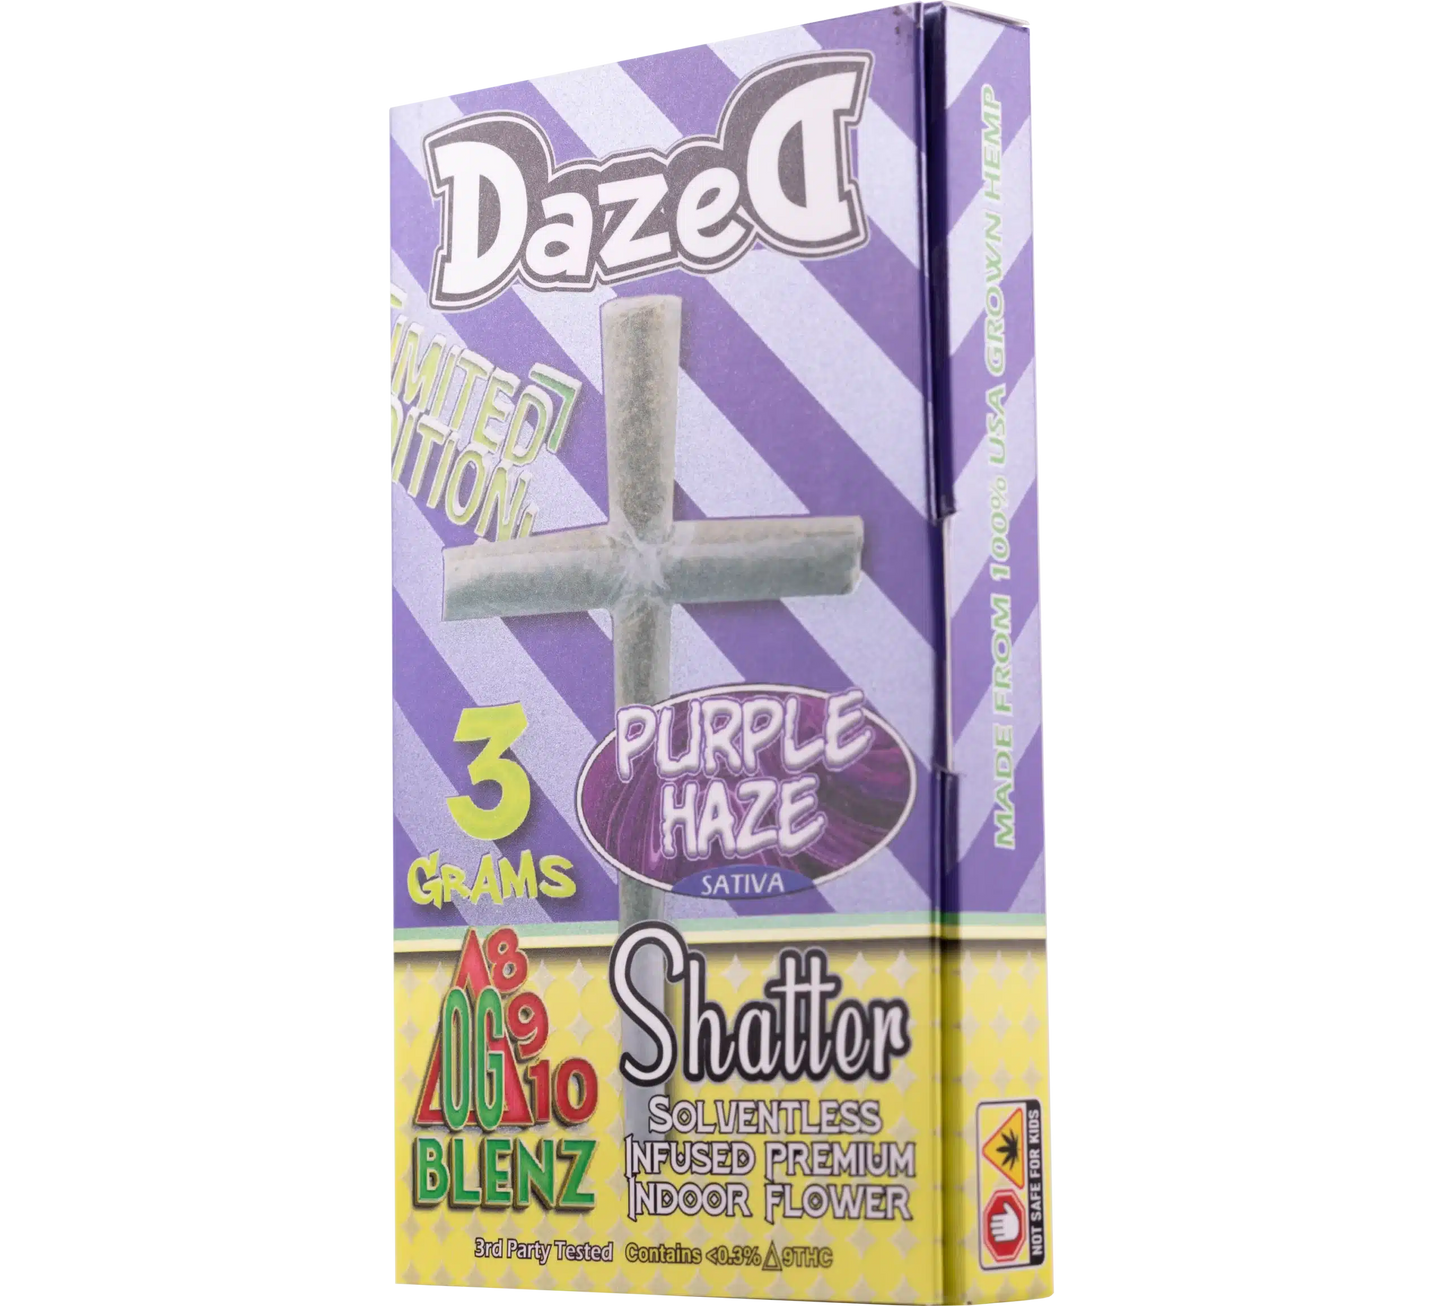 DazeD8 OG Blenz Shatter Cross Joint (3g) Best Sales Price - Topicals